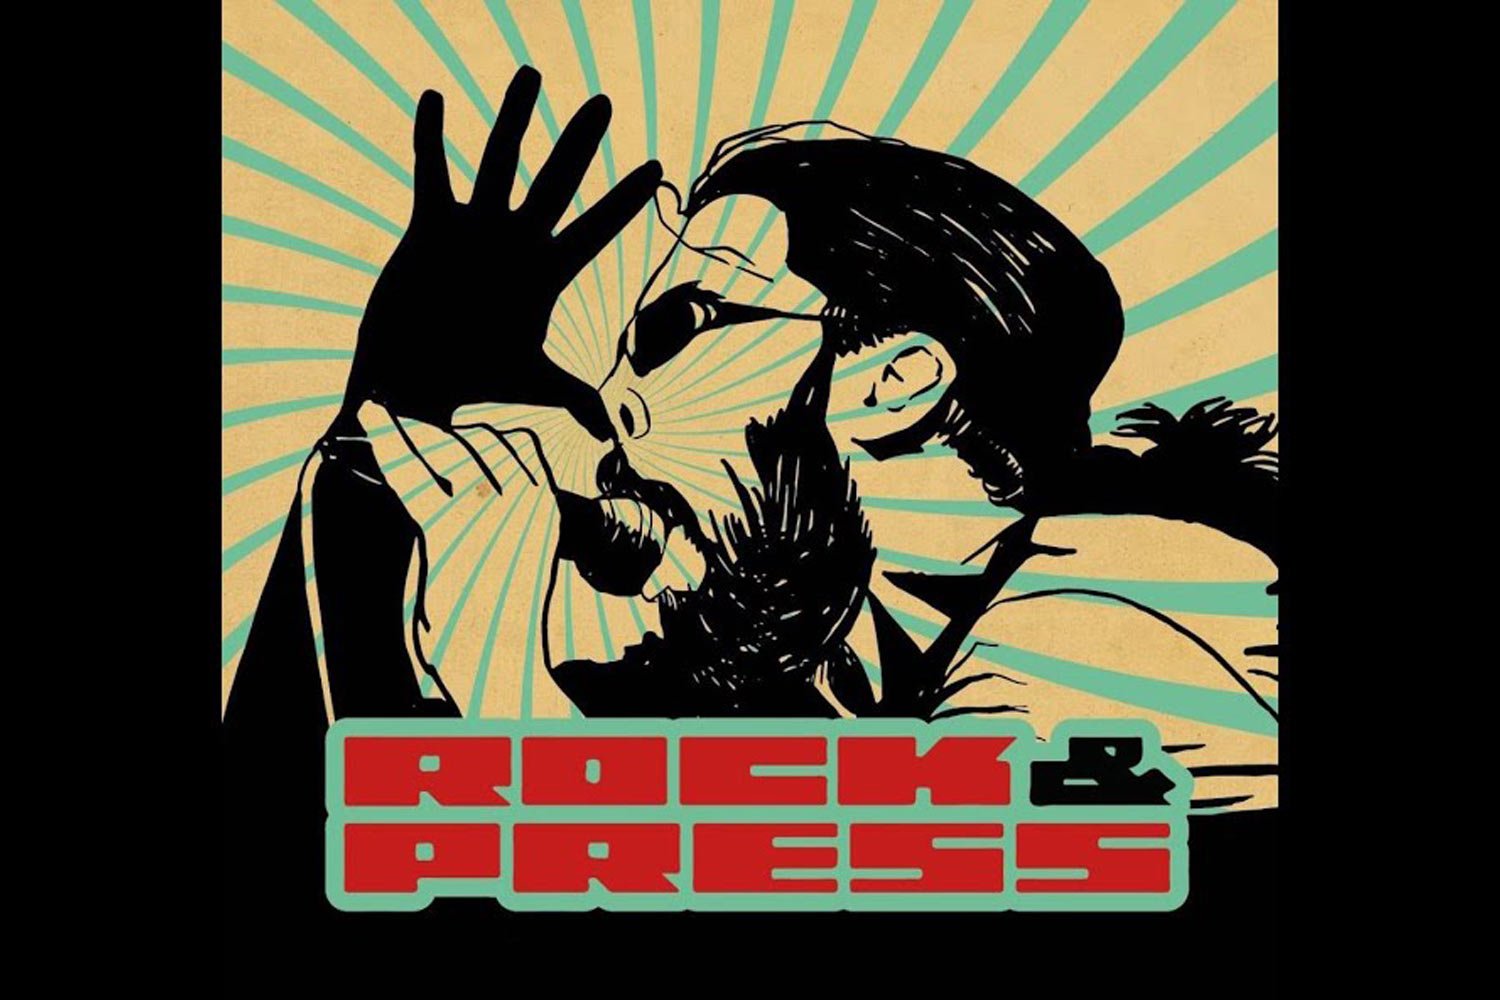 Rock & Press - Mallorca Music Magazine